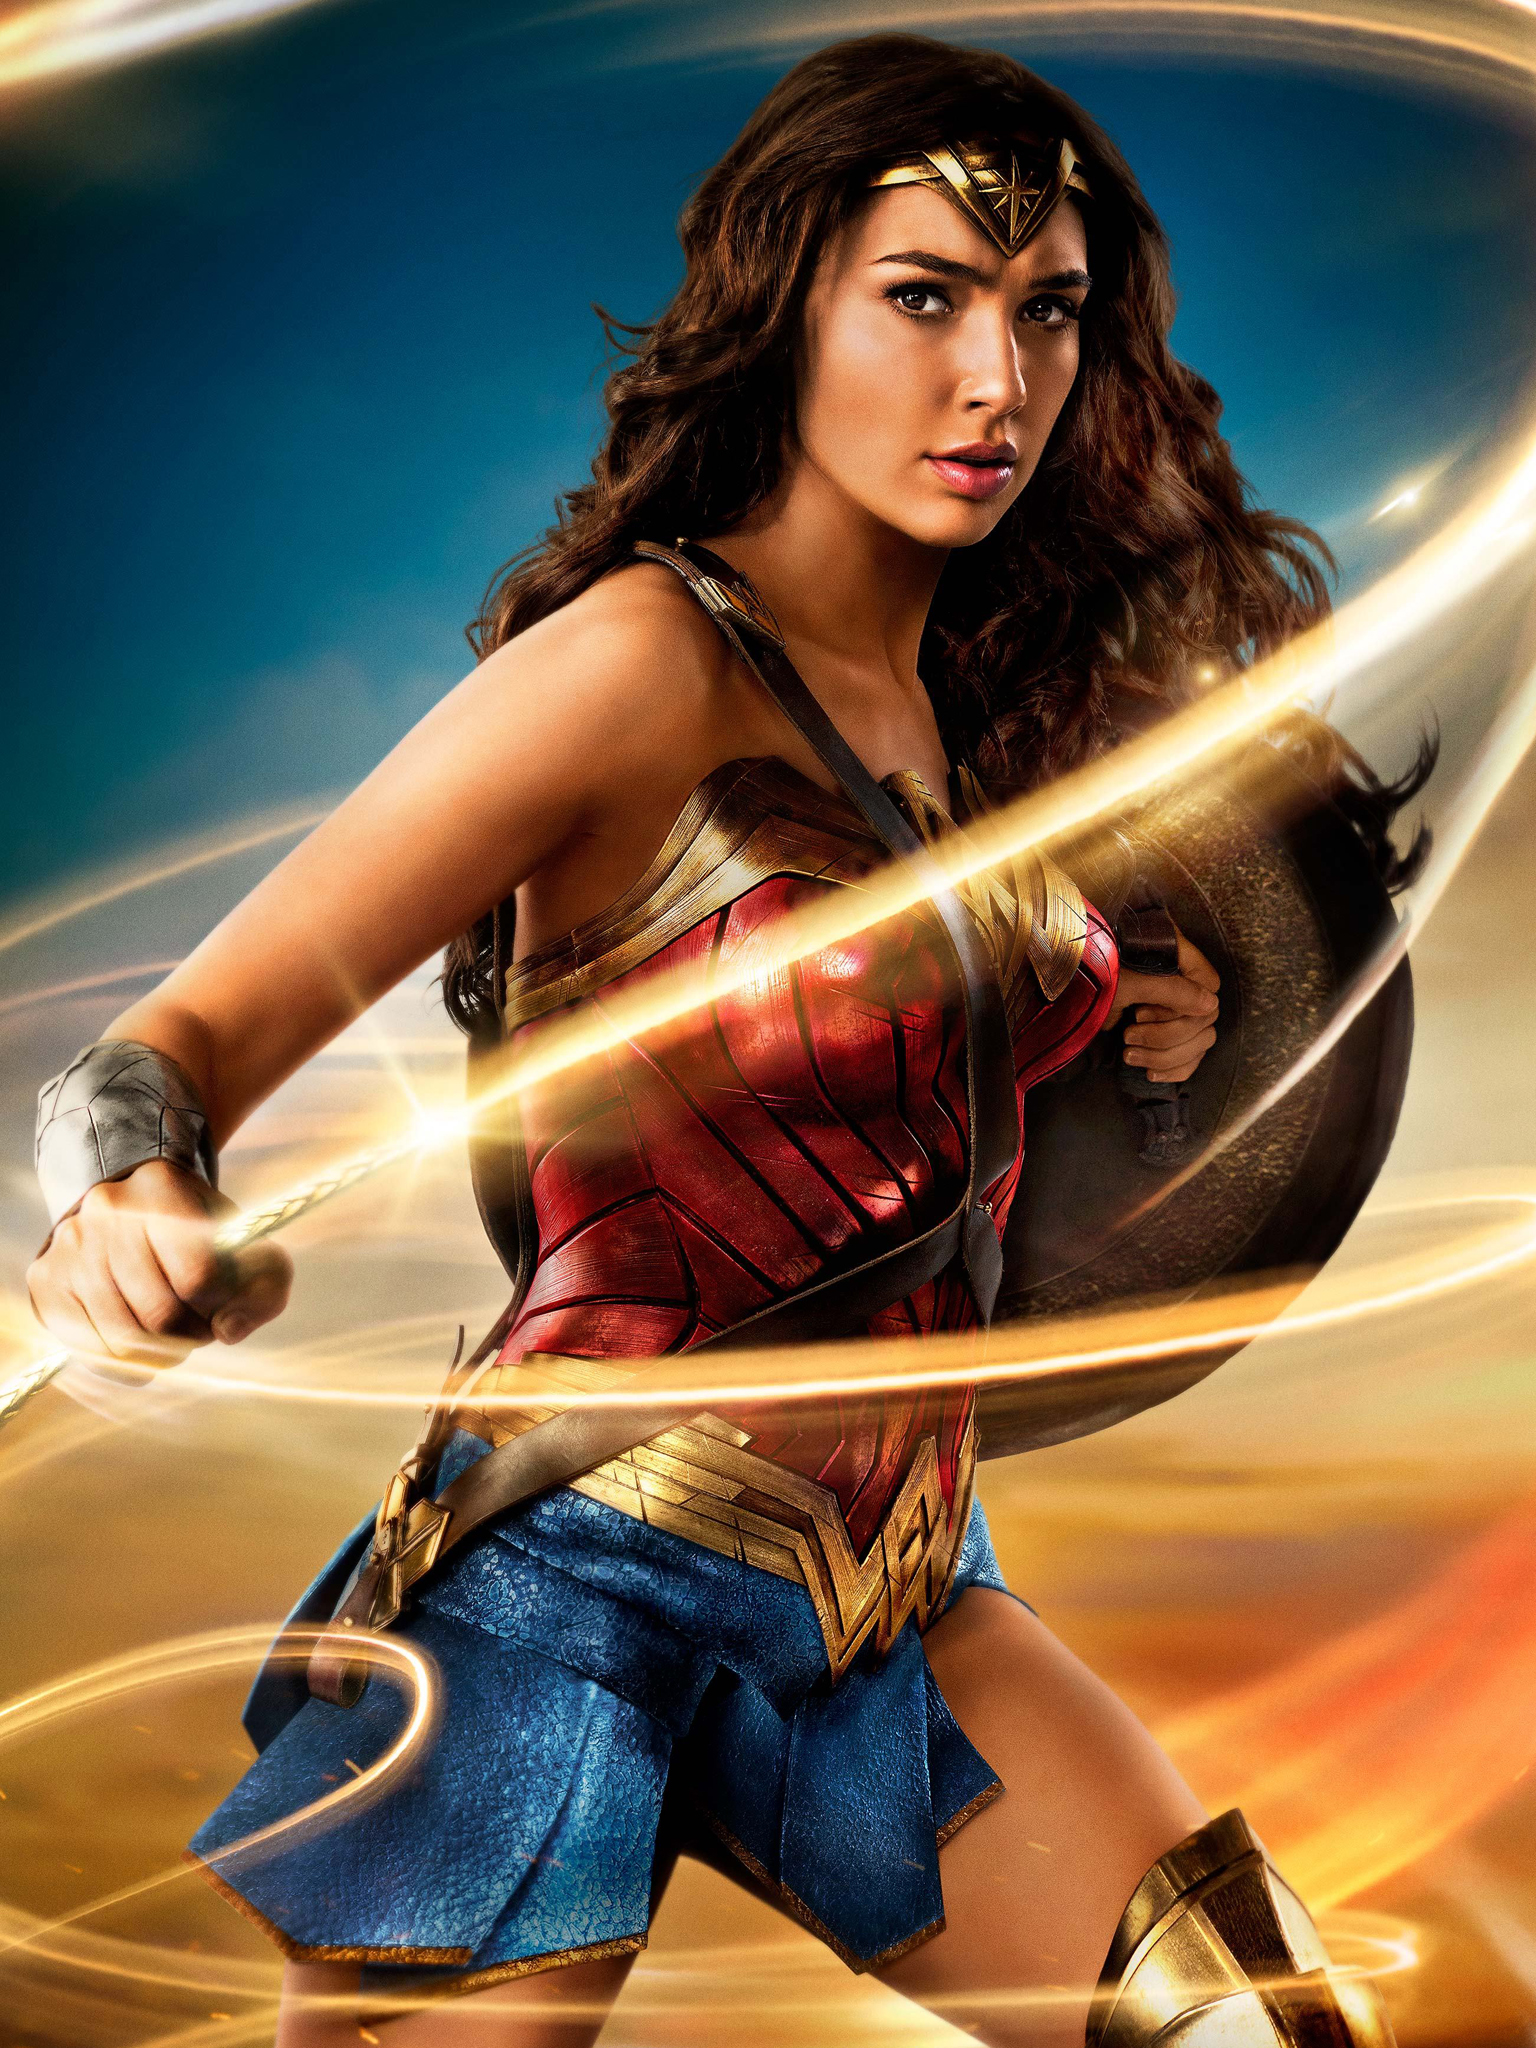 General 1536x2048 Wonder Woman Gal Gadot women DC Extended Universe superheroines long hair brunette shield movies portrait display digital art